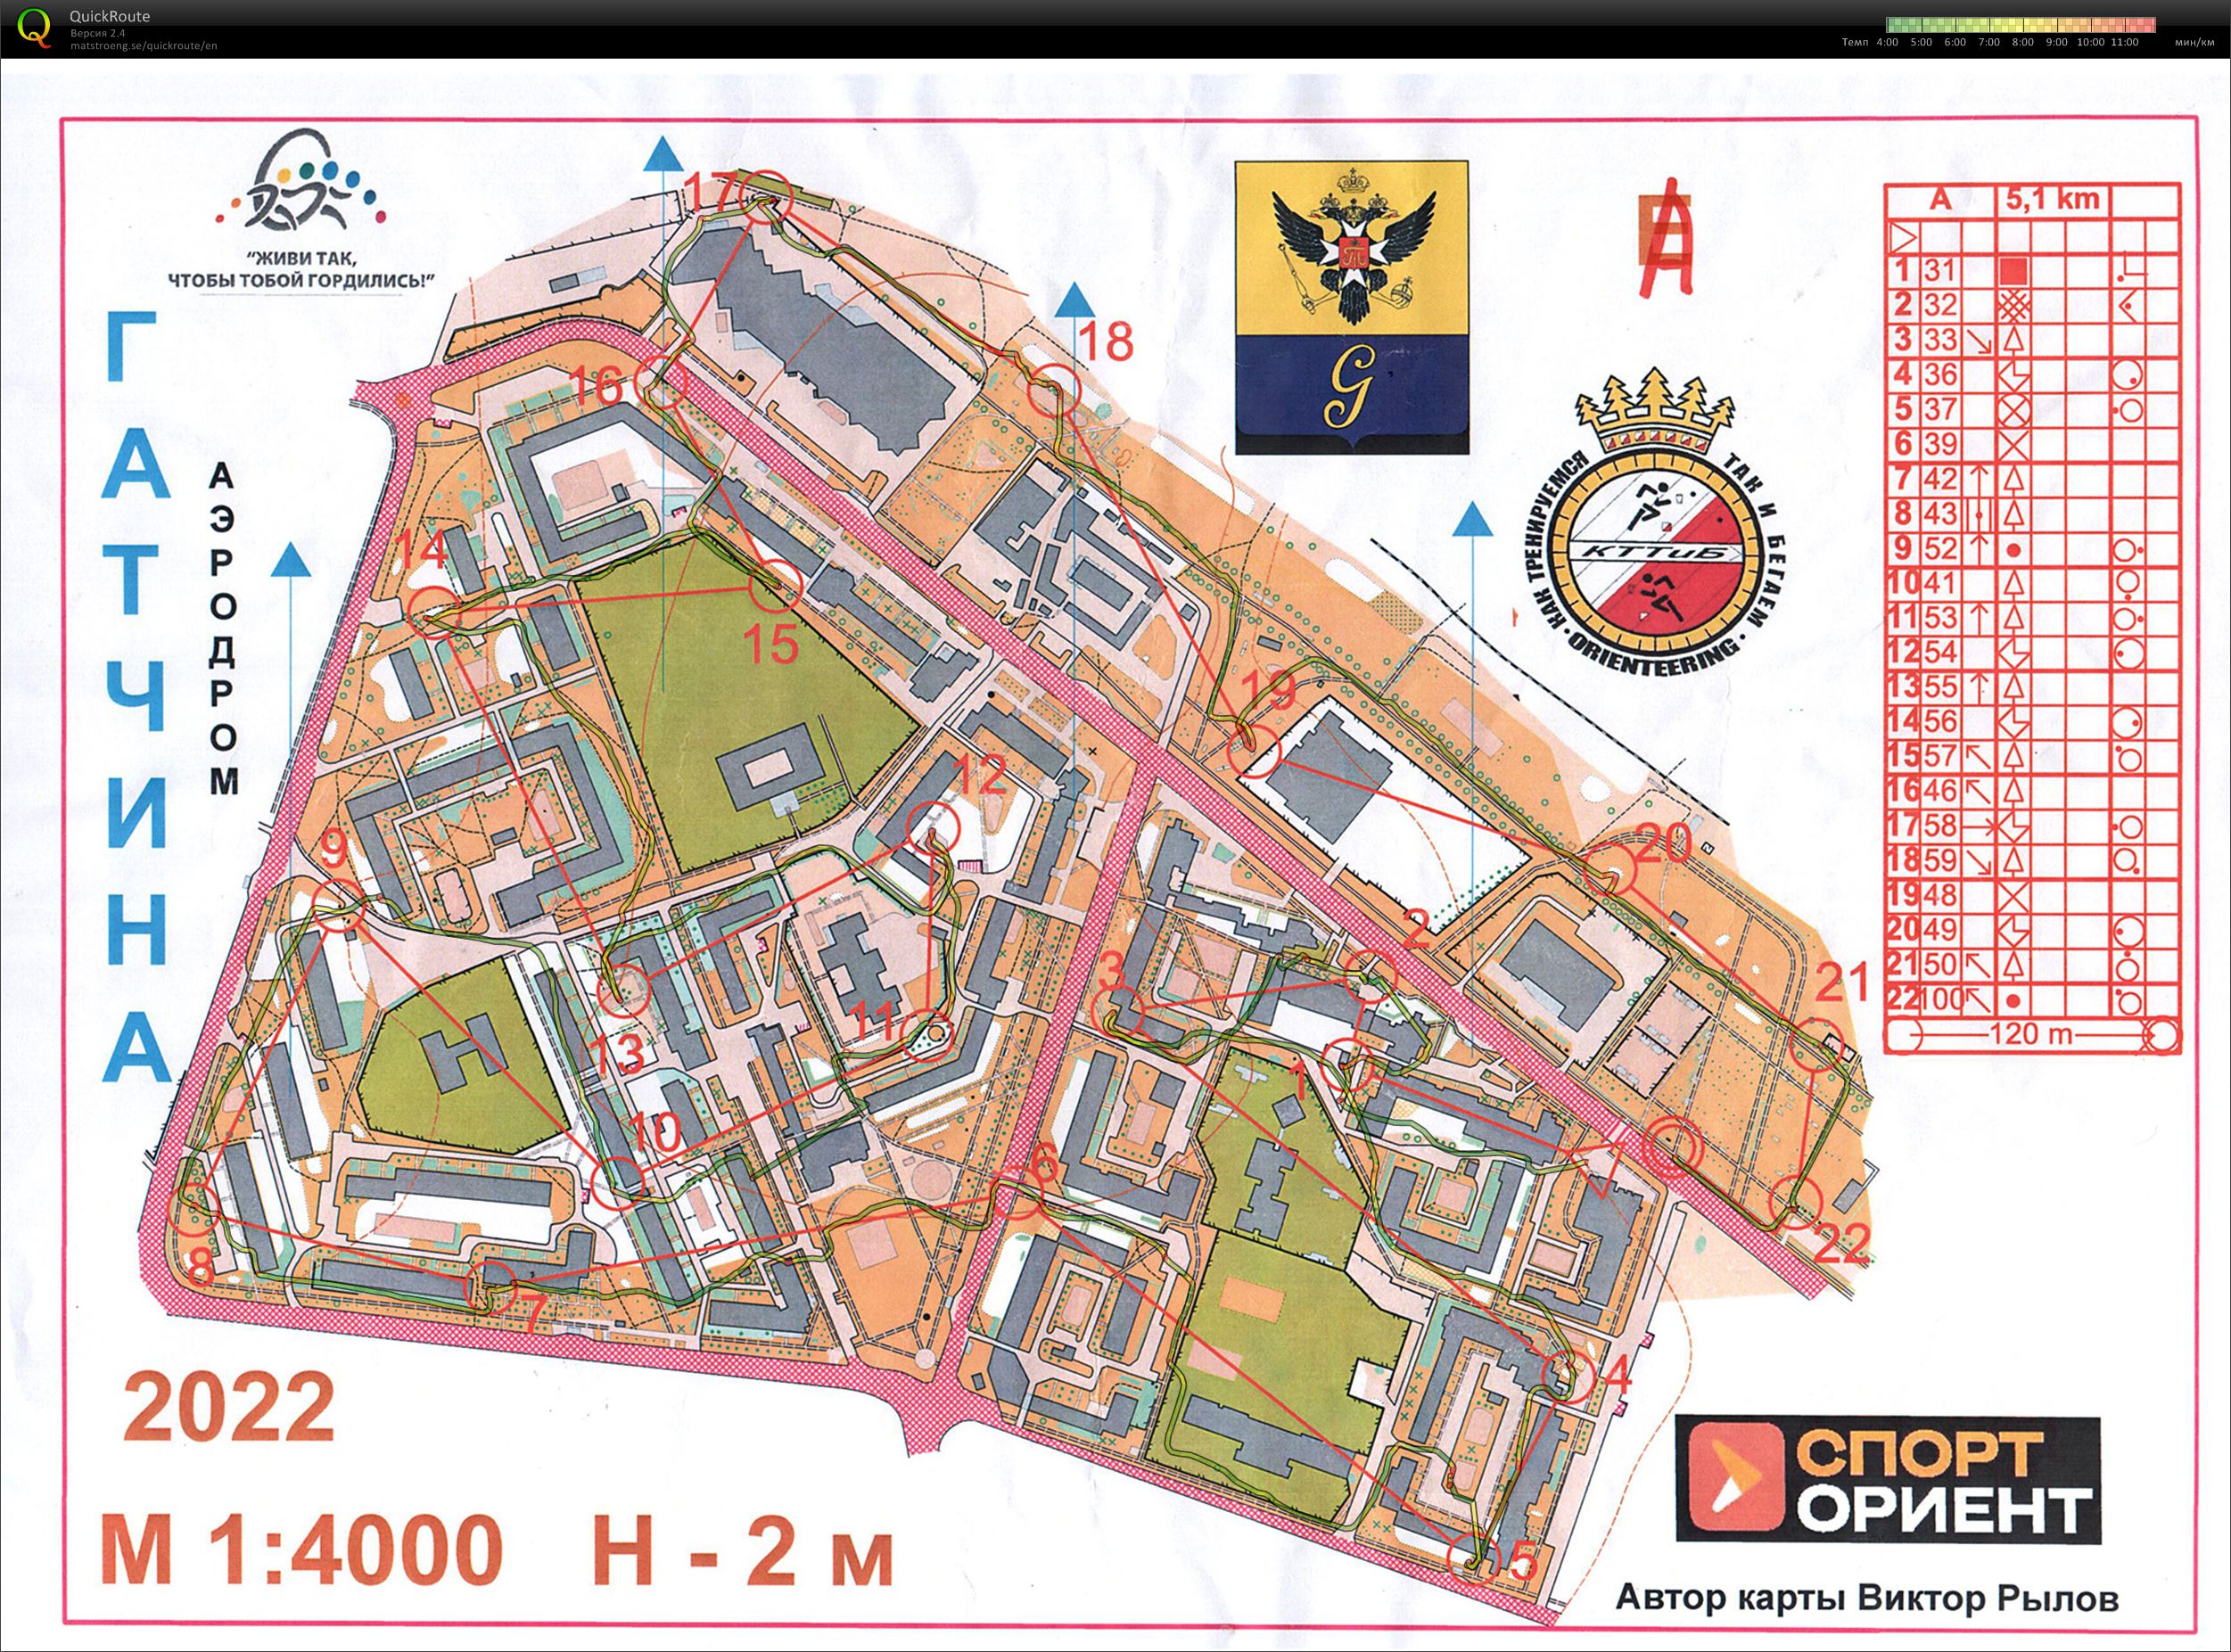 Map with track - Гатчина, спринт, area - Гатчина Аэродром, from orienteering map archive of Вячеслав Осипов